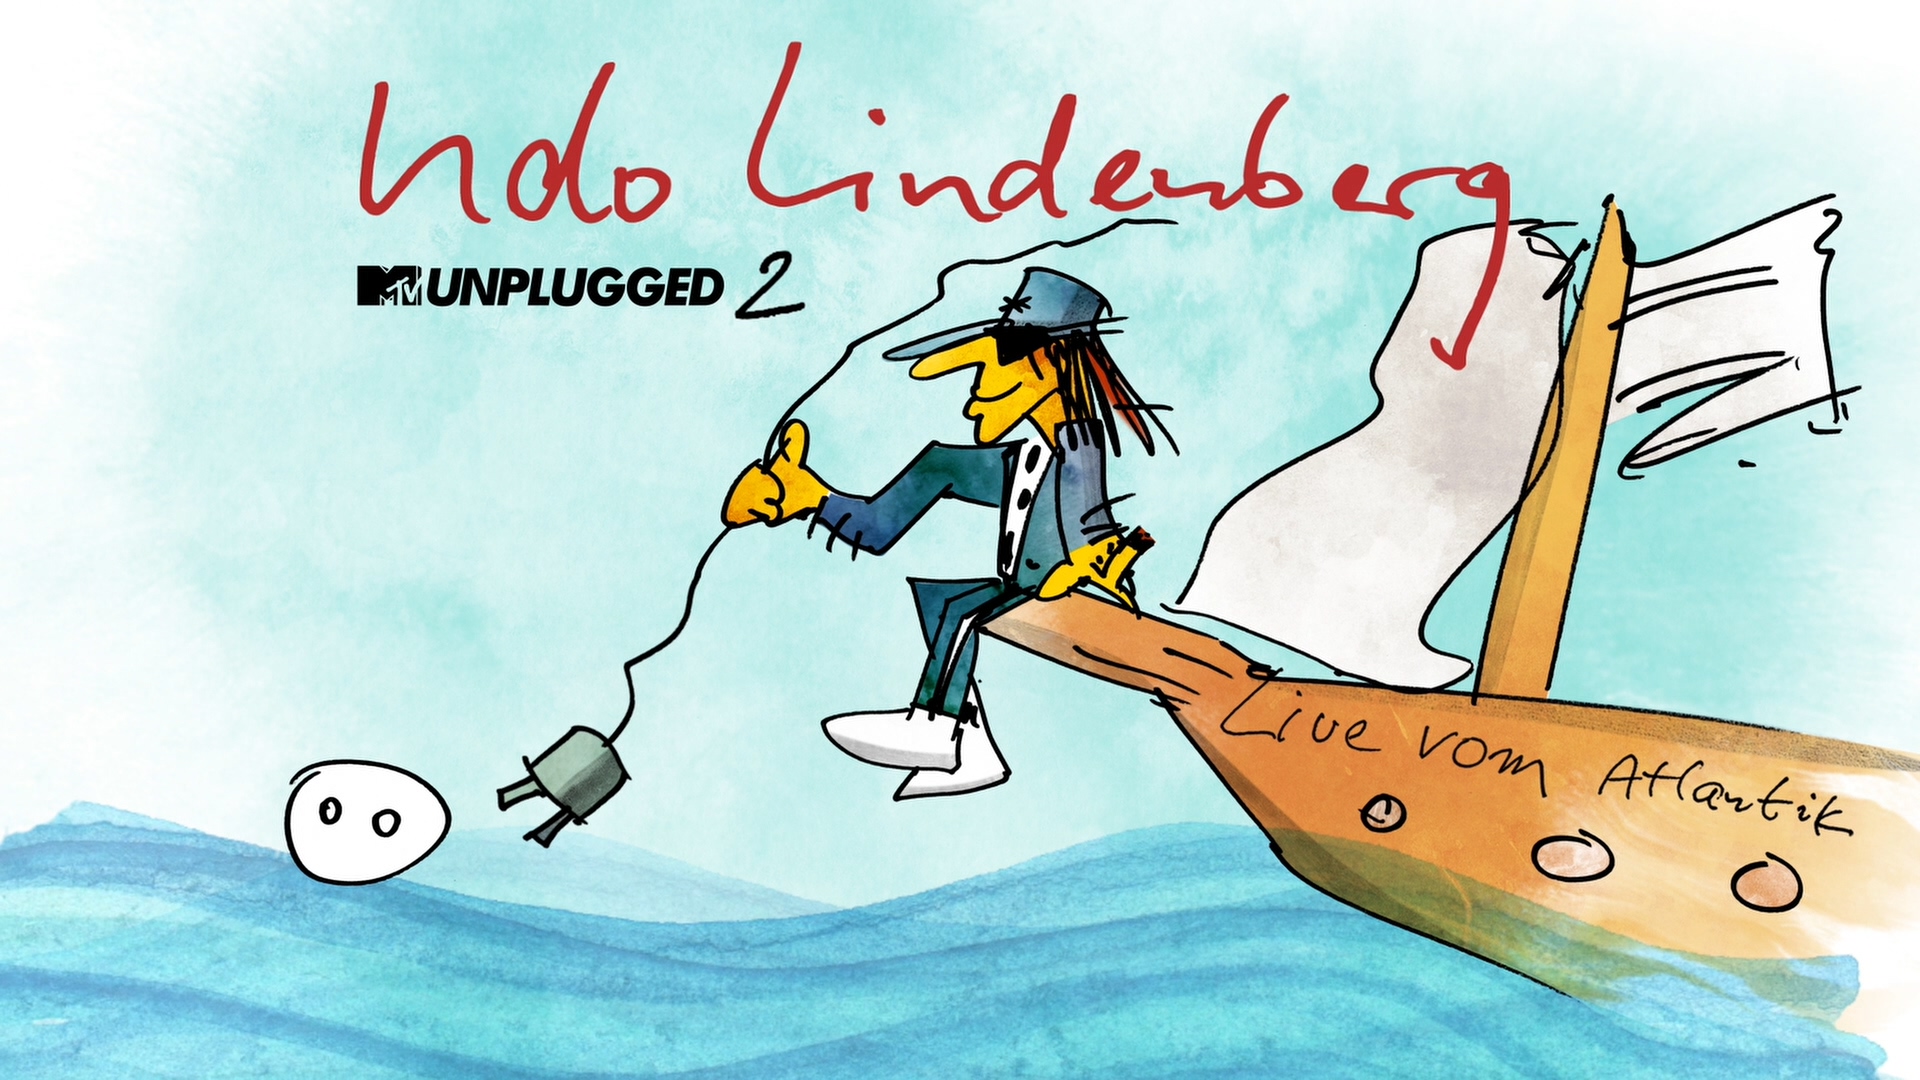 00003.m2ts(Udo Lindenberg - MTV Unplugged 2 (Live vom Atlantik) 2018 (Blu-ray))_20181217_194954.396.jpg